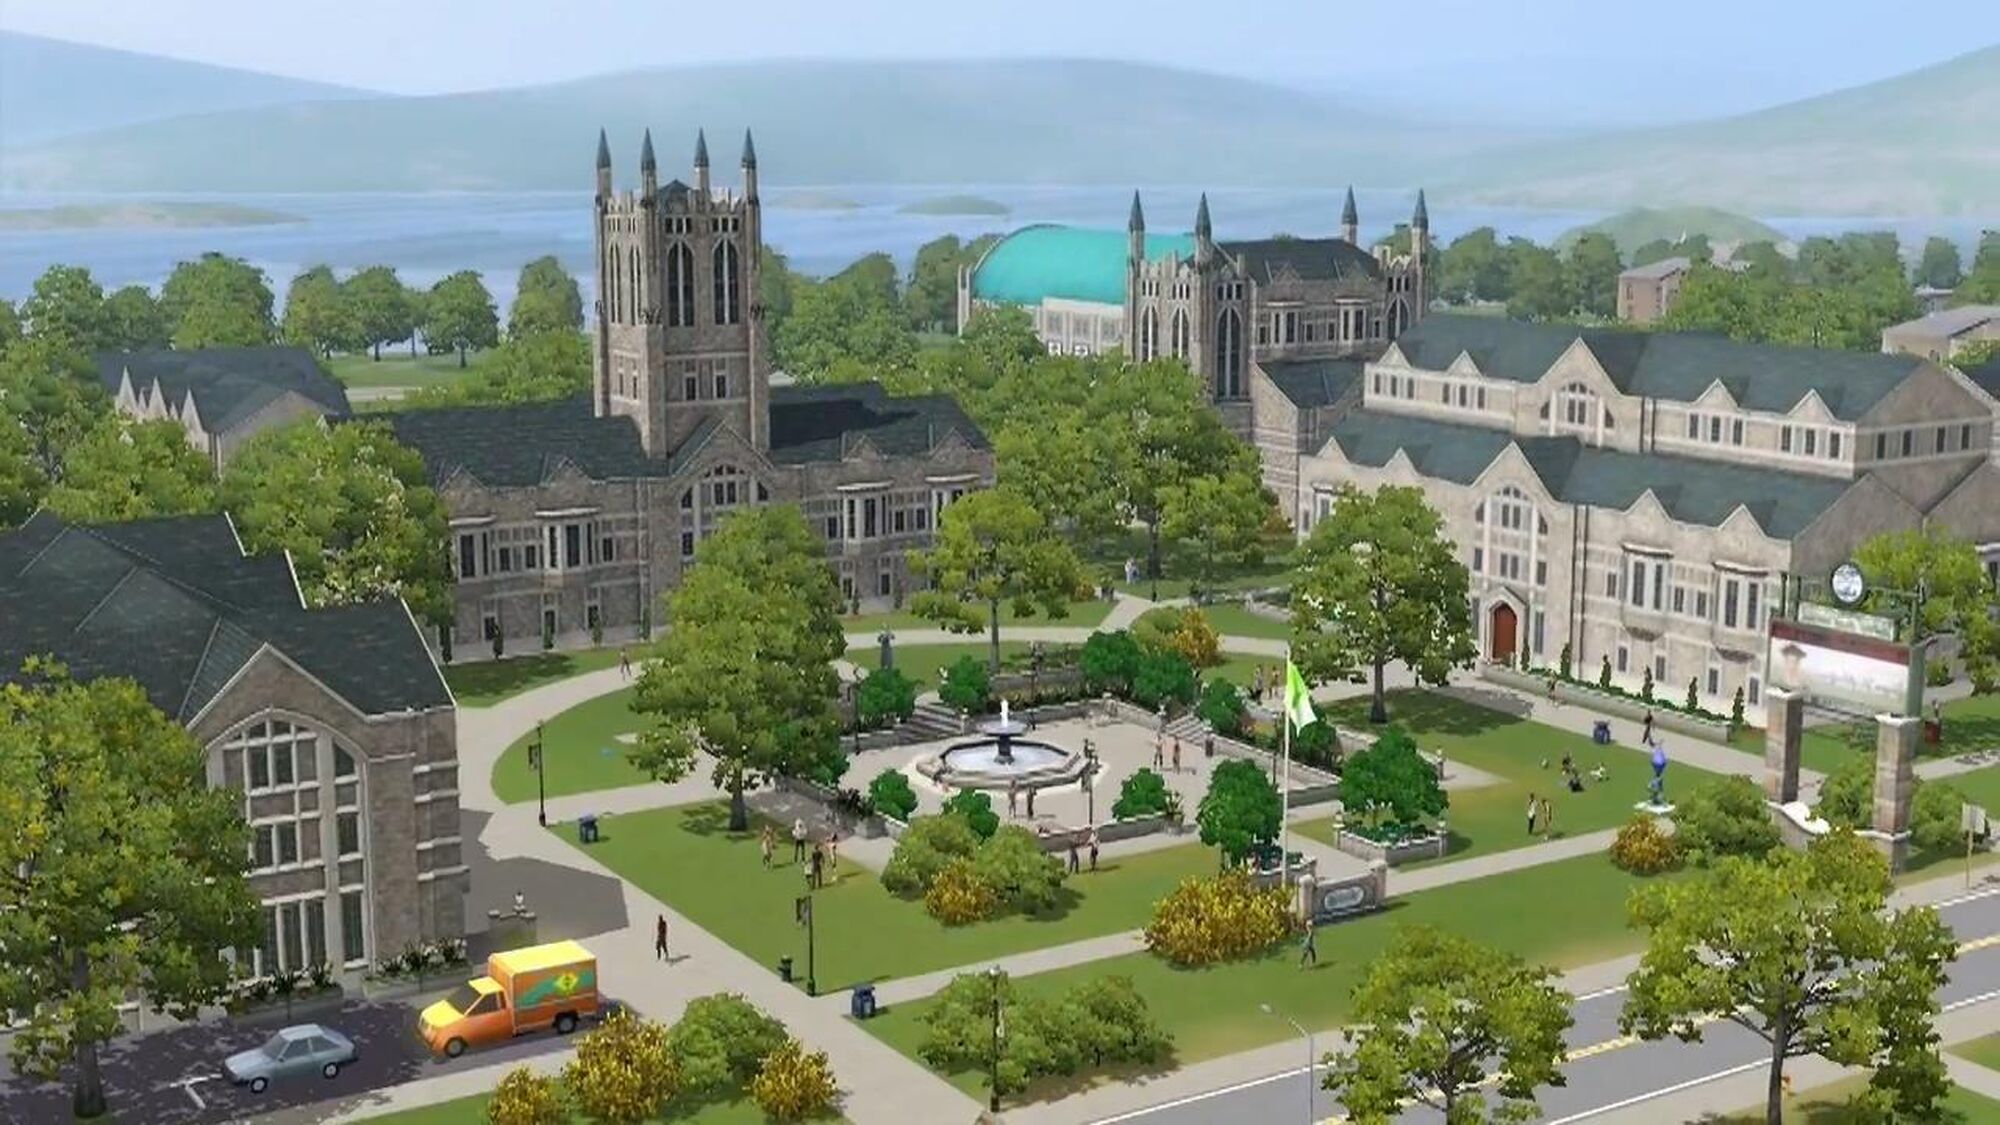 Sim State University, The Sims Wiki